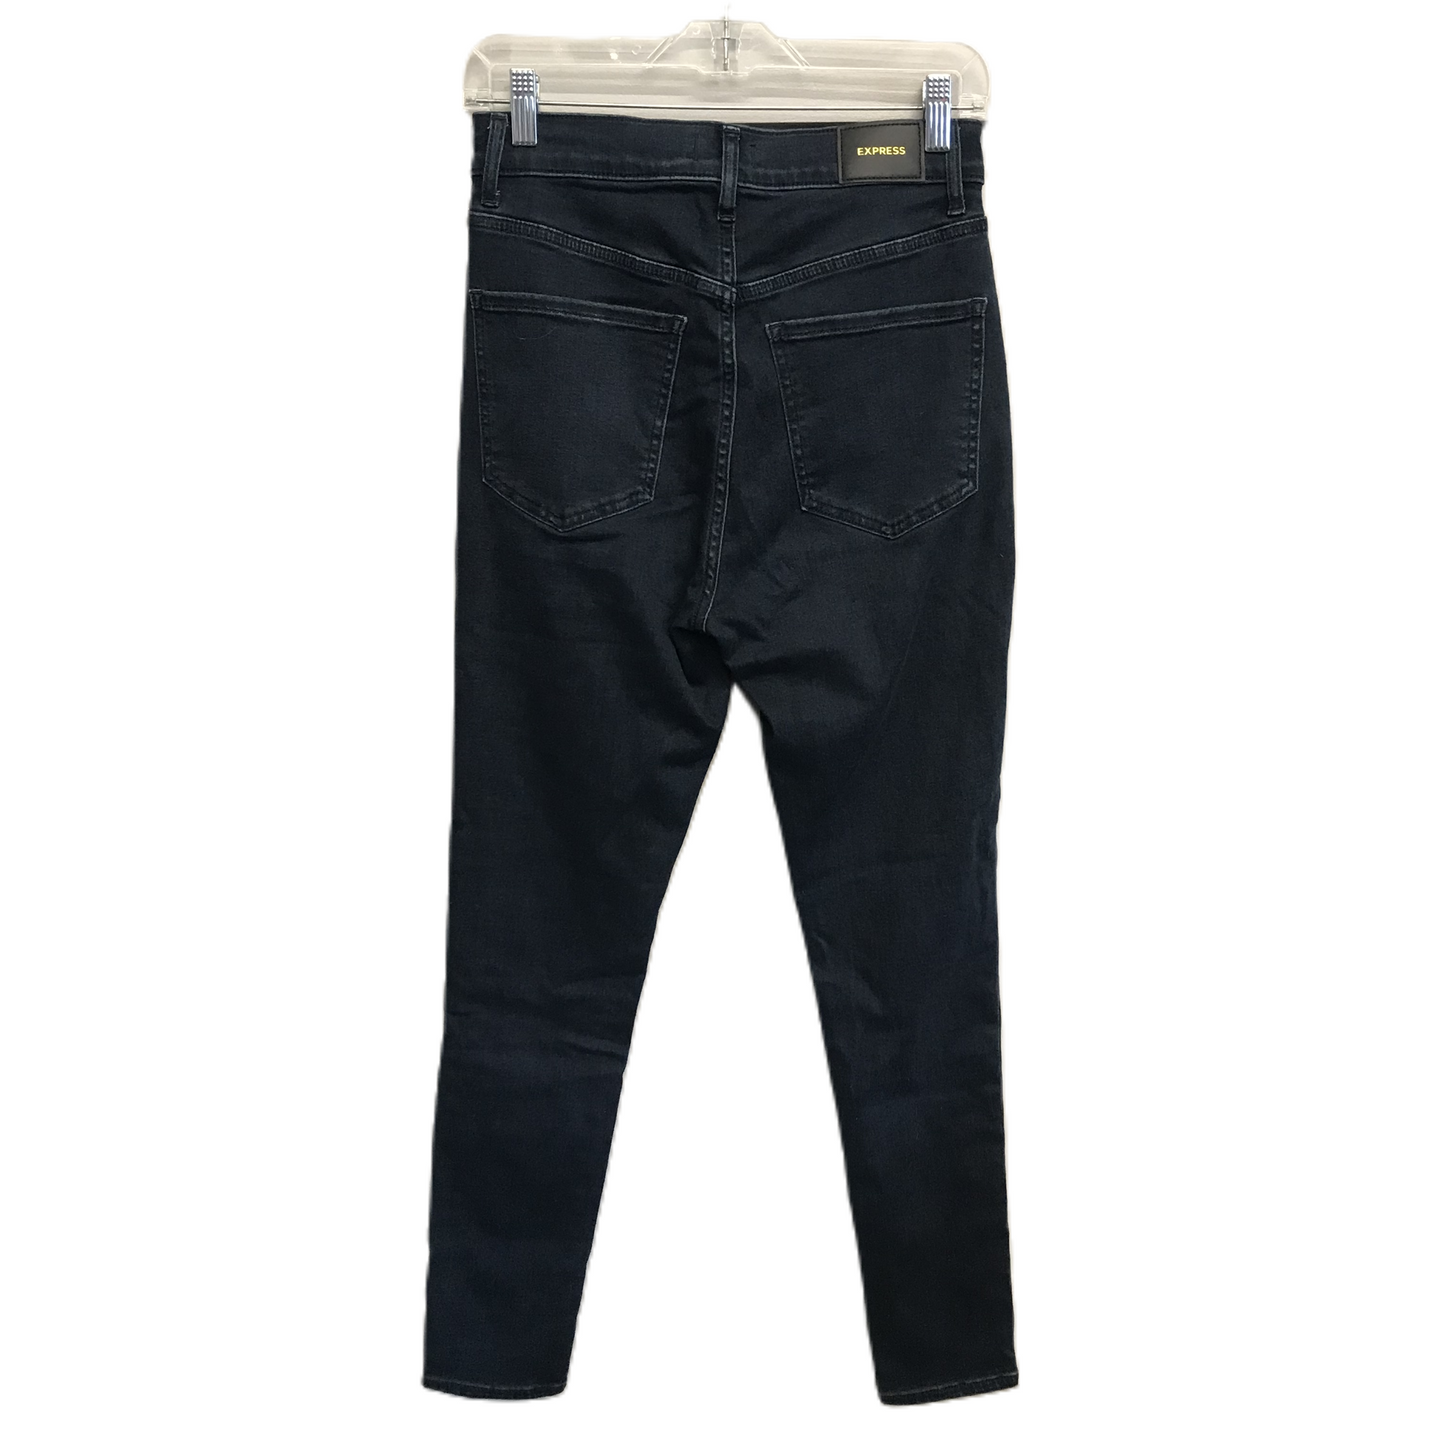 Blue Denim Jeans Skinny By Express, Size: 6